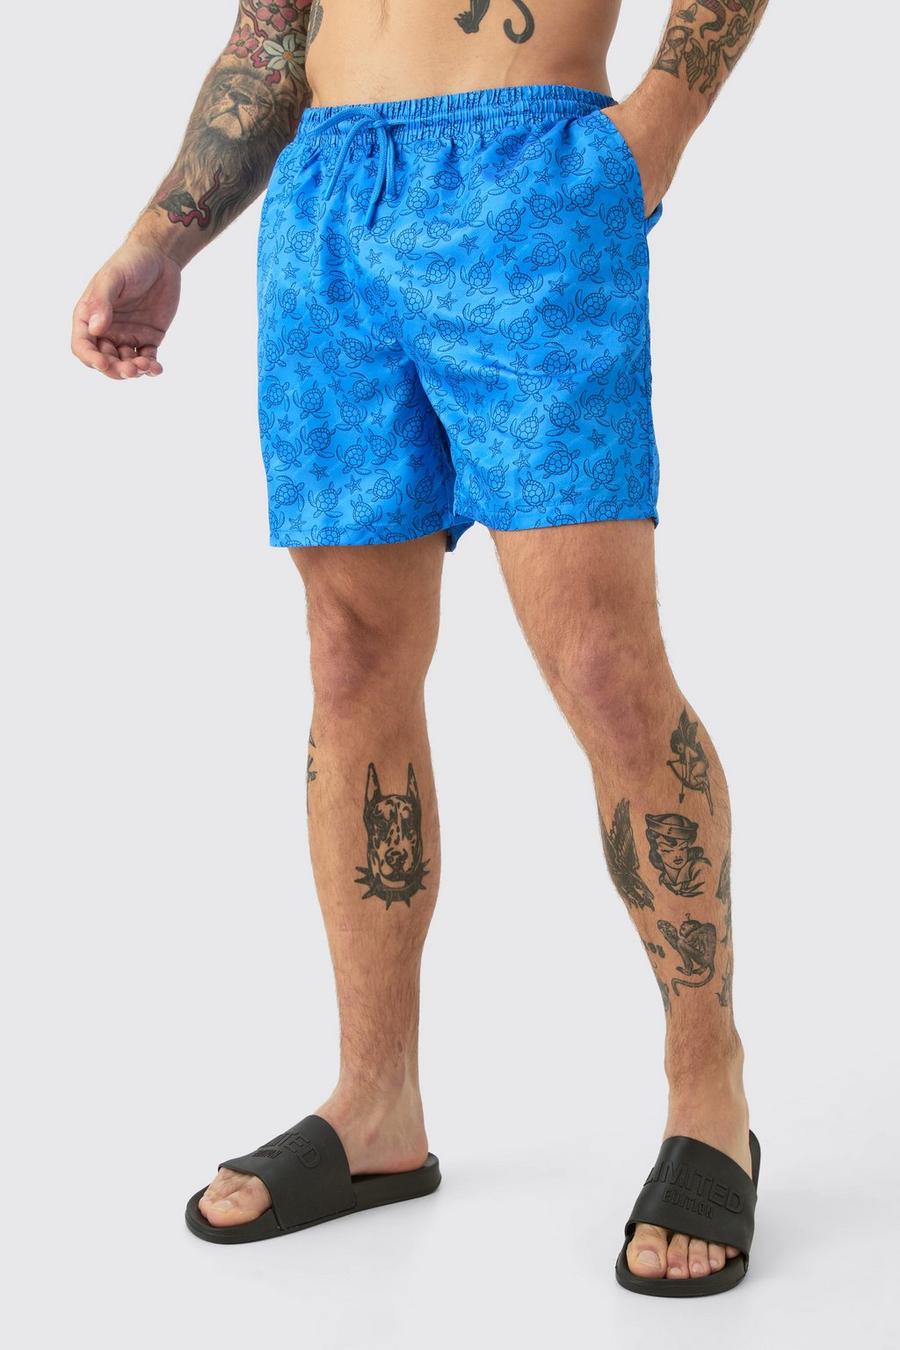 Costume a pantaloncino medio Limited Edition color tartaruga, Blue